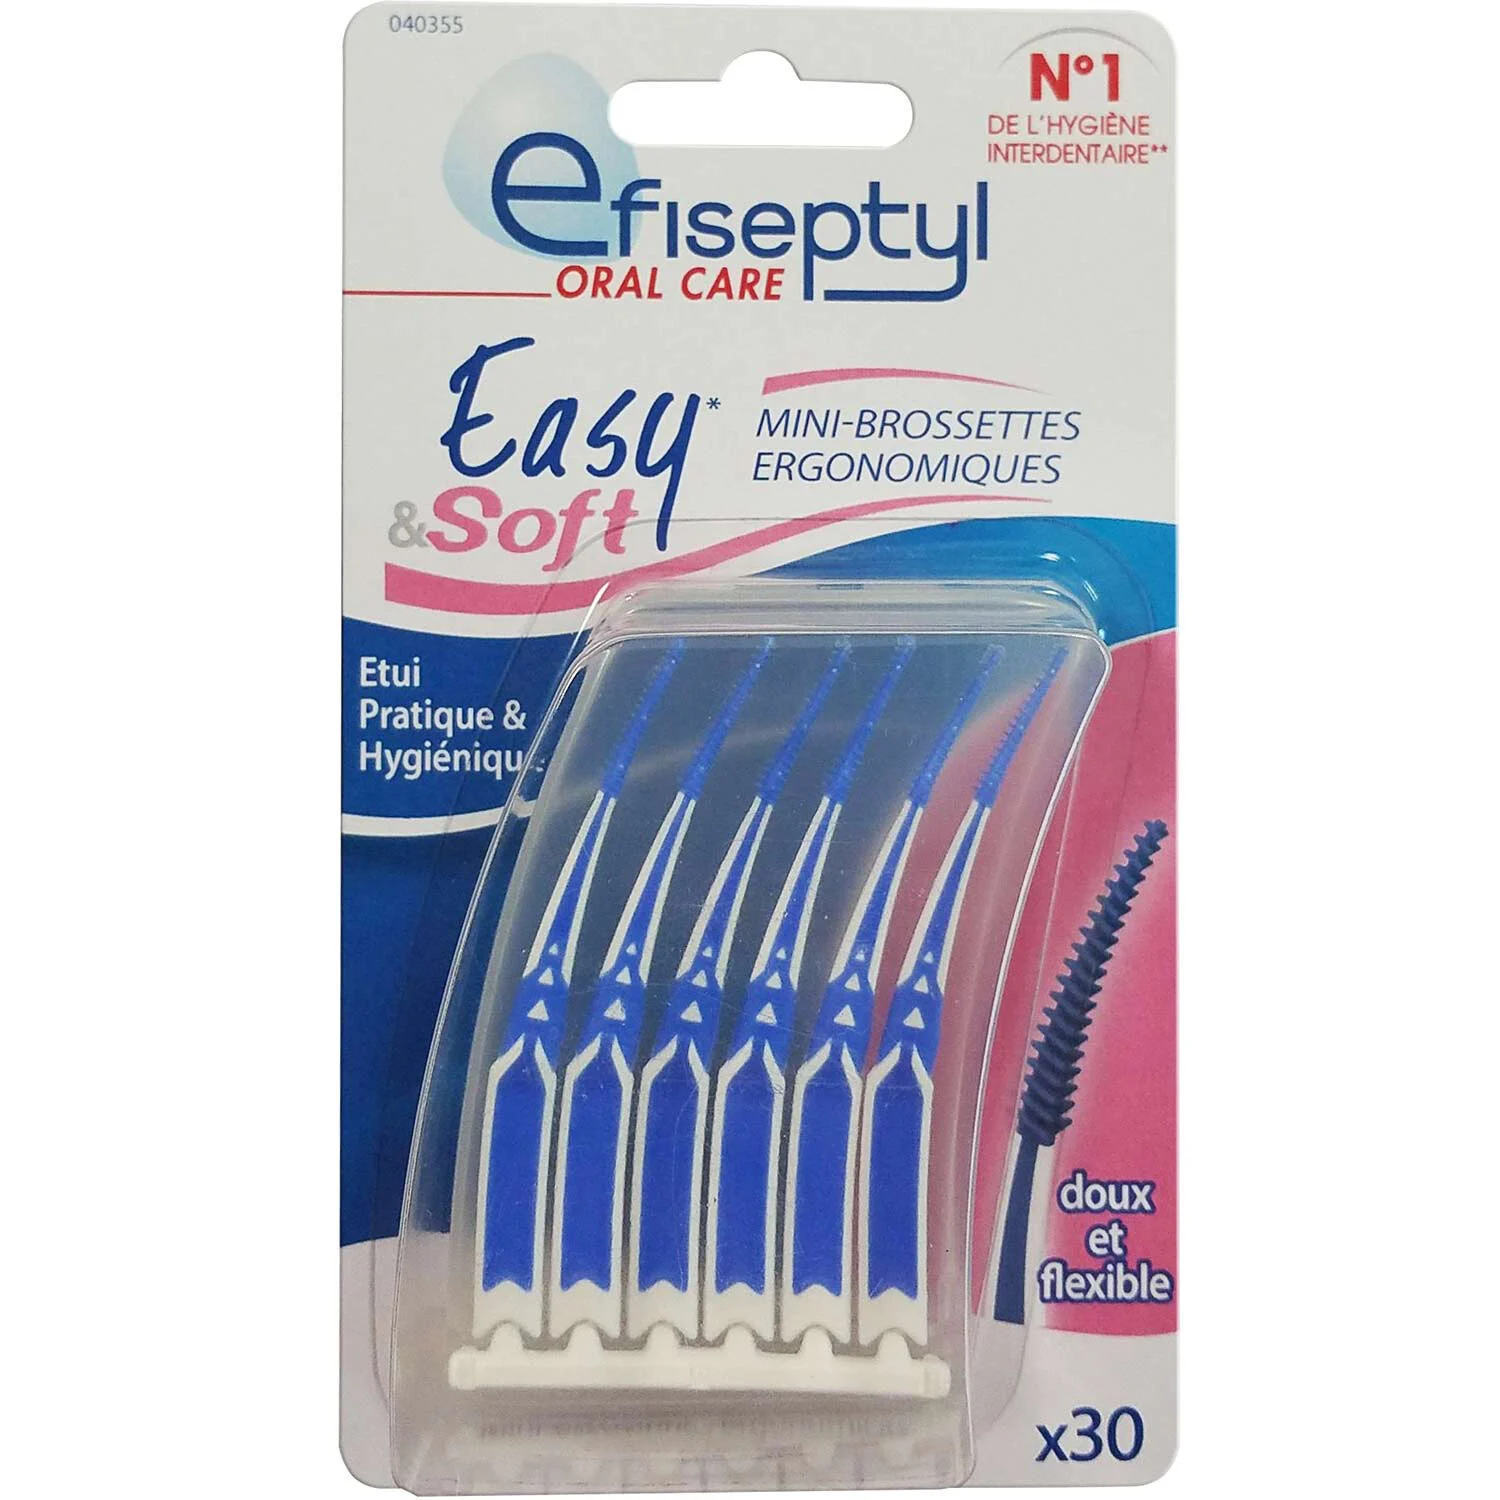 Brossette Interdentaire Easy & Soft X30 - Efiseptyl